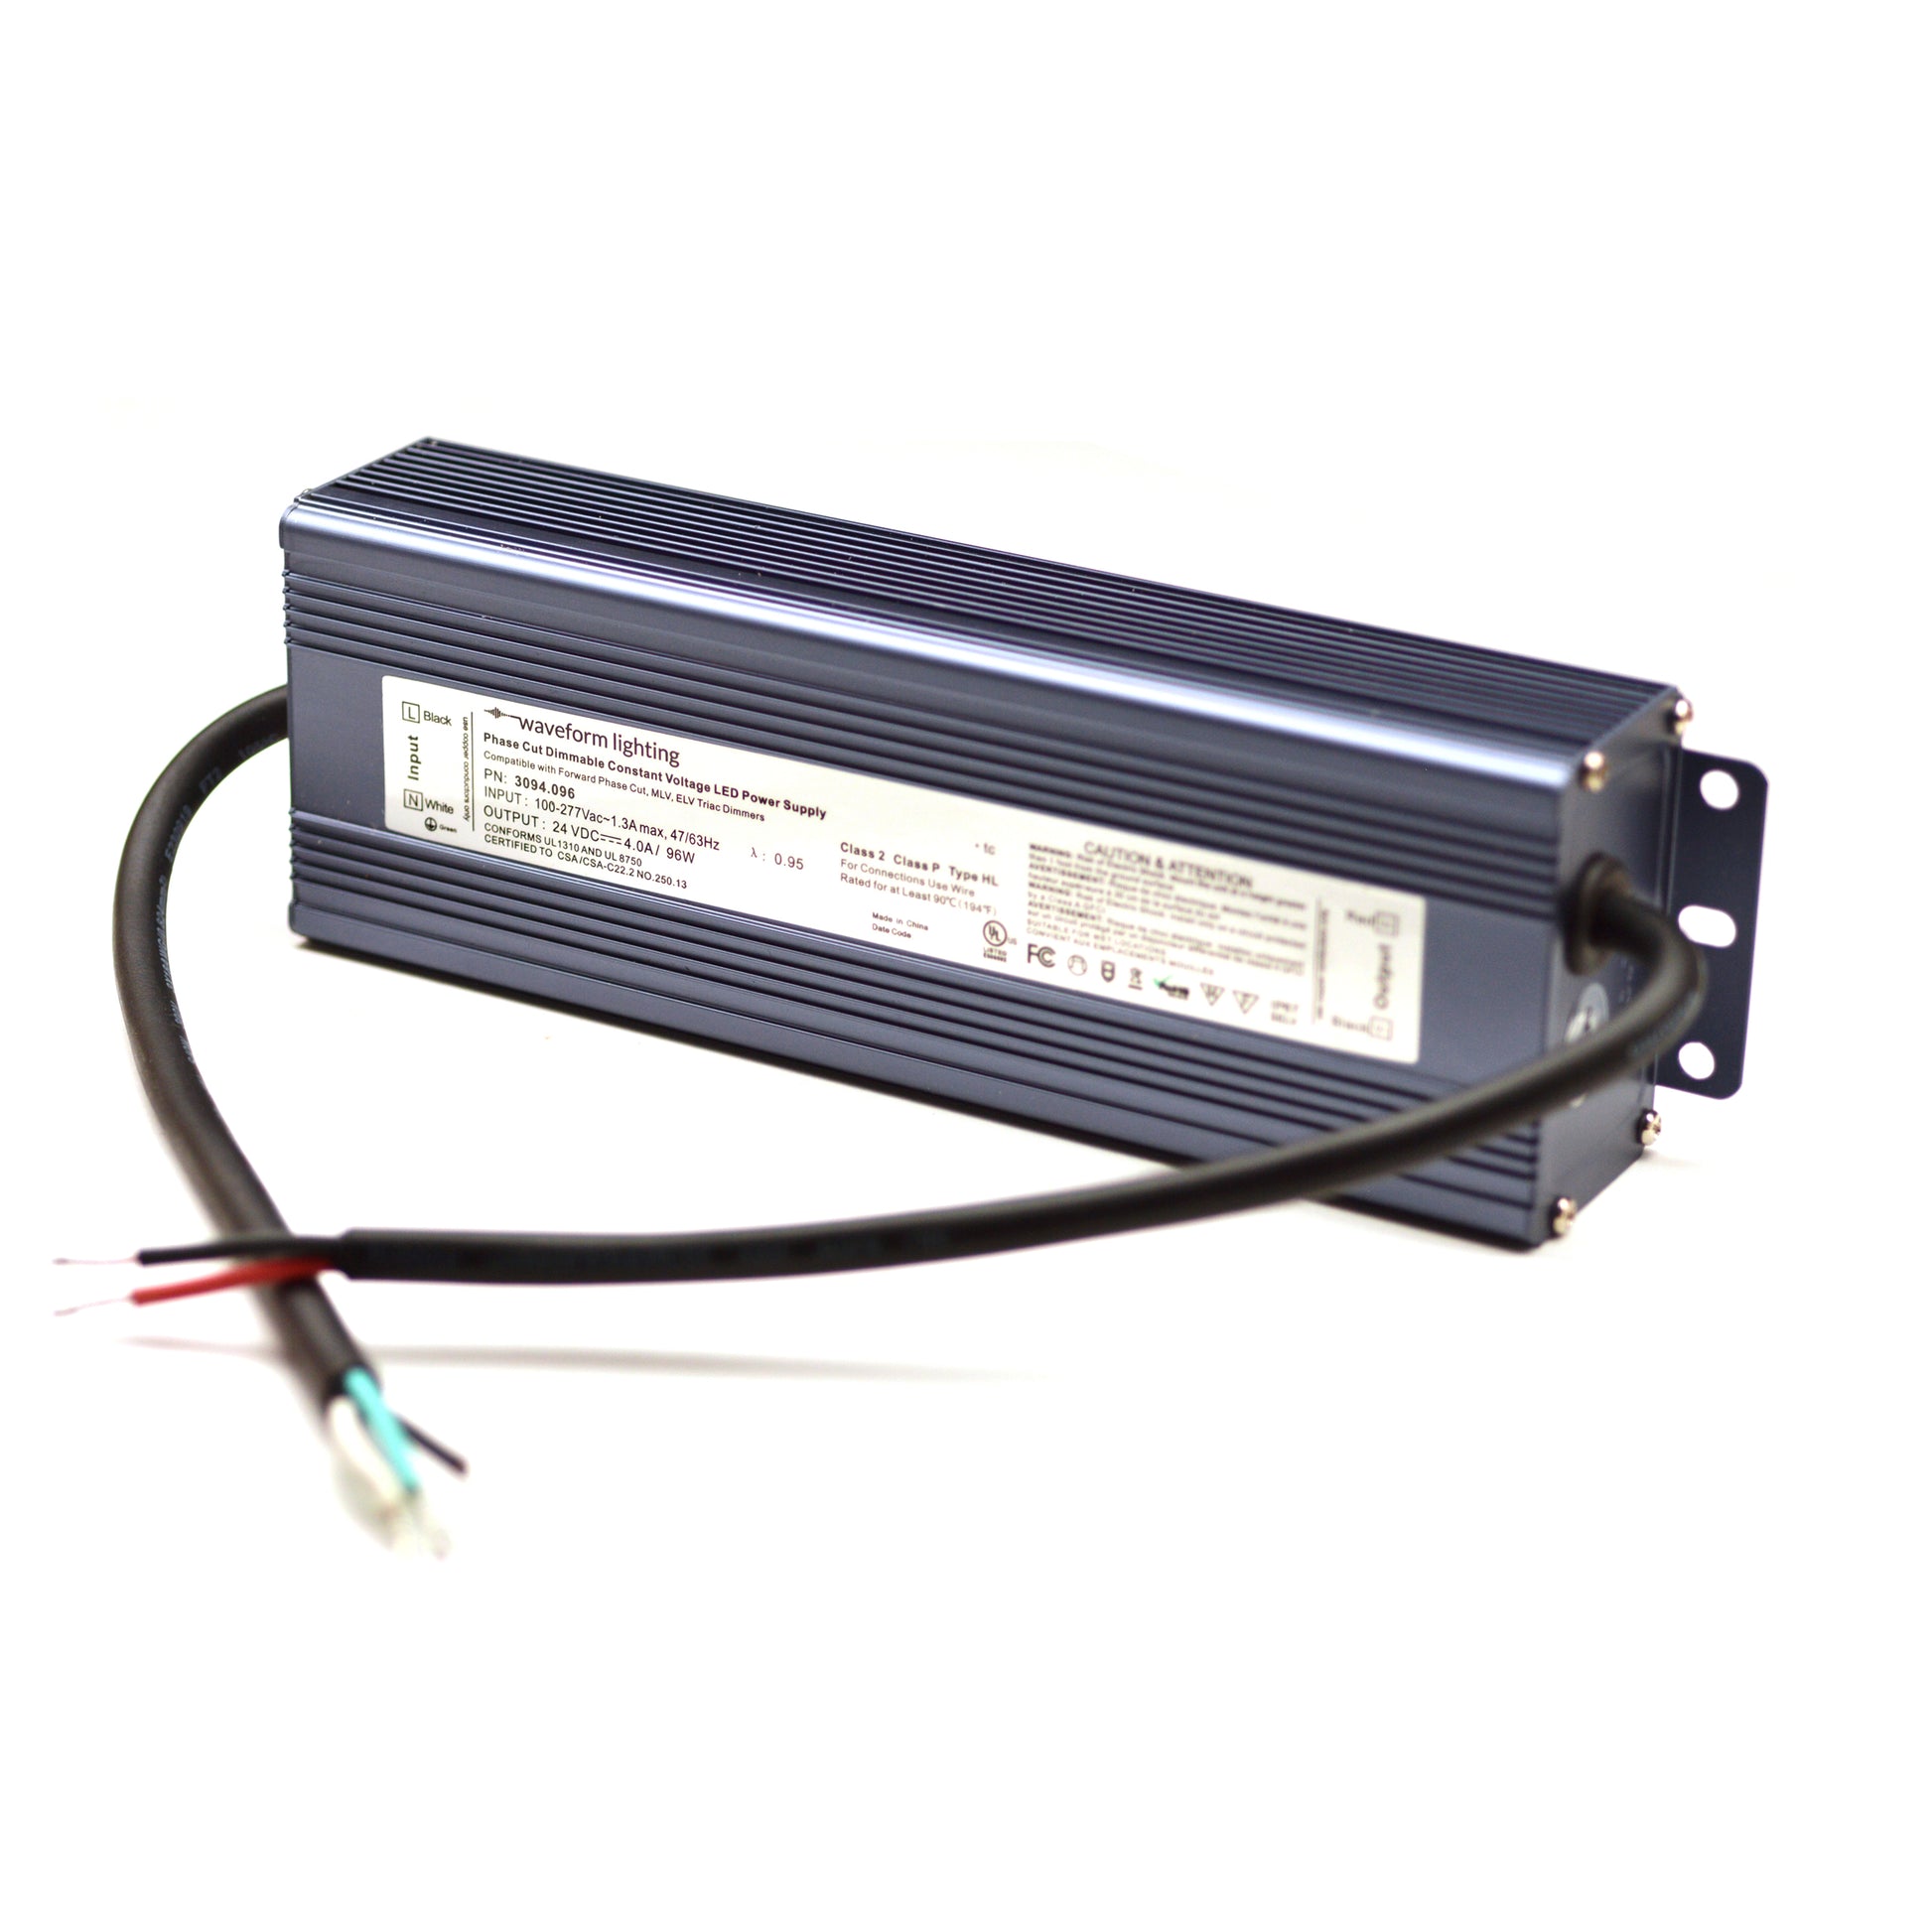 eksekverbar Slumber kulstof CENTRIC SERIES™ Dimmable Power Supply for LED Strip – Waveform Lighting